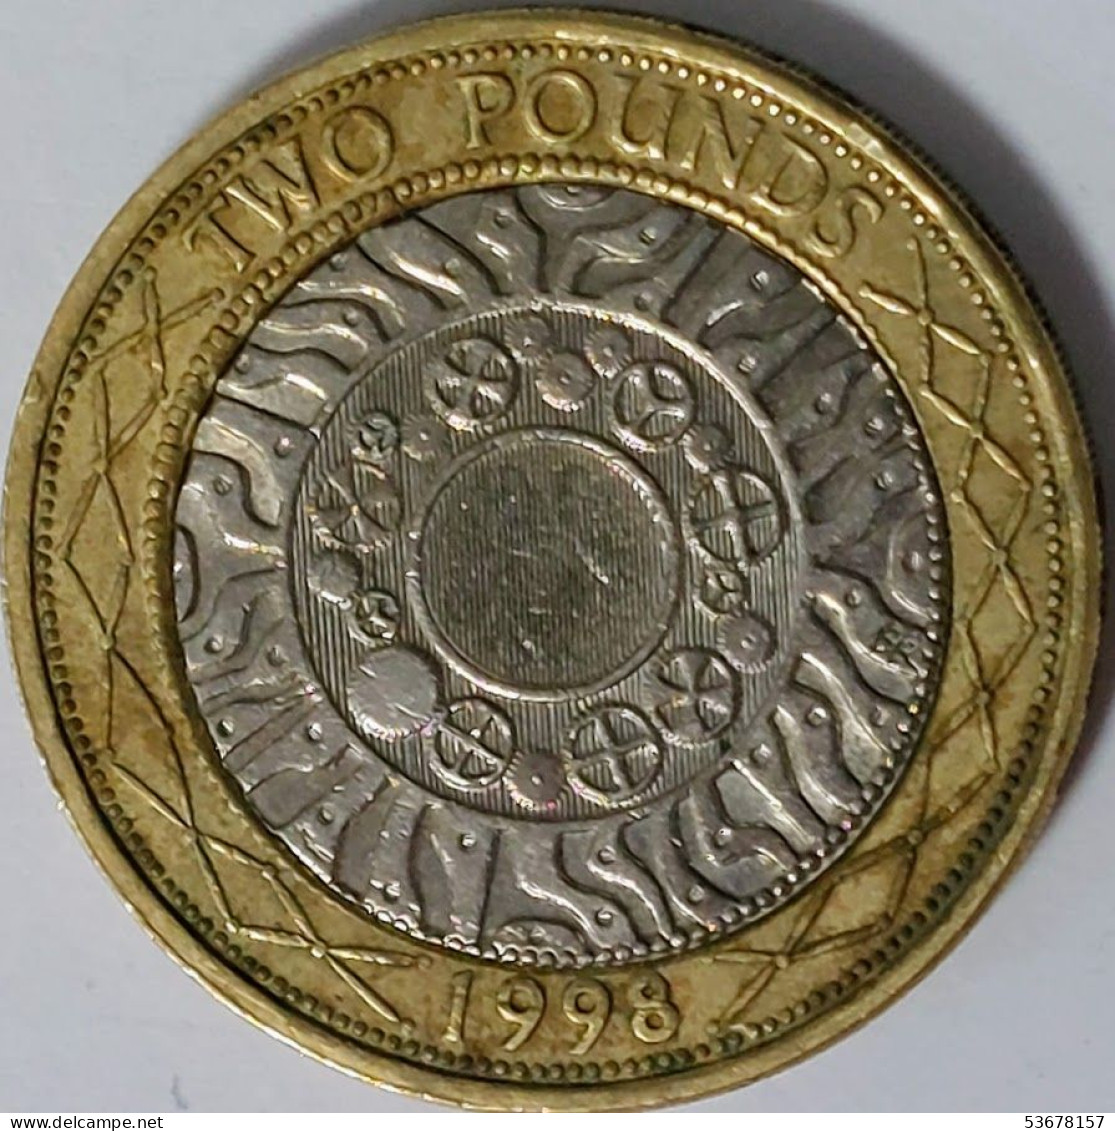 Great Britain - 2 Pounds 1998, KM# 994 (#2340) - 2 Pounds